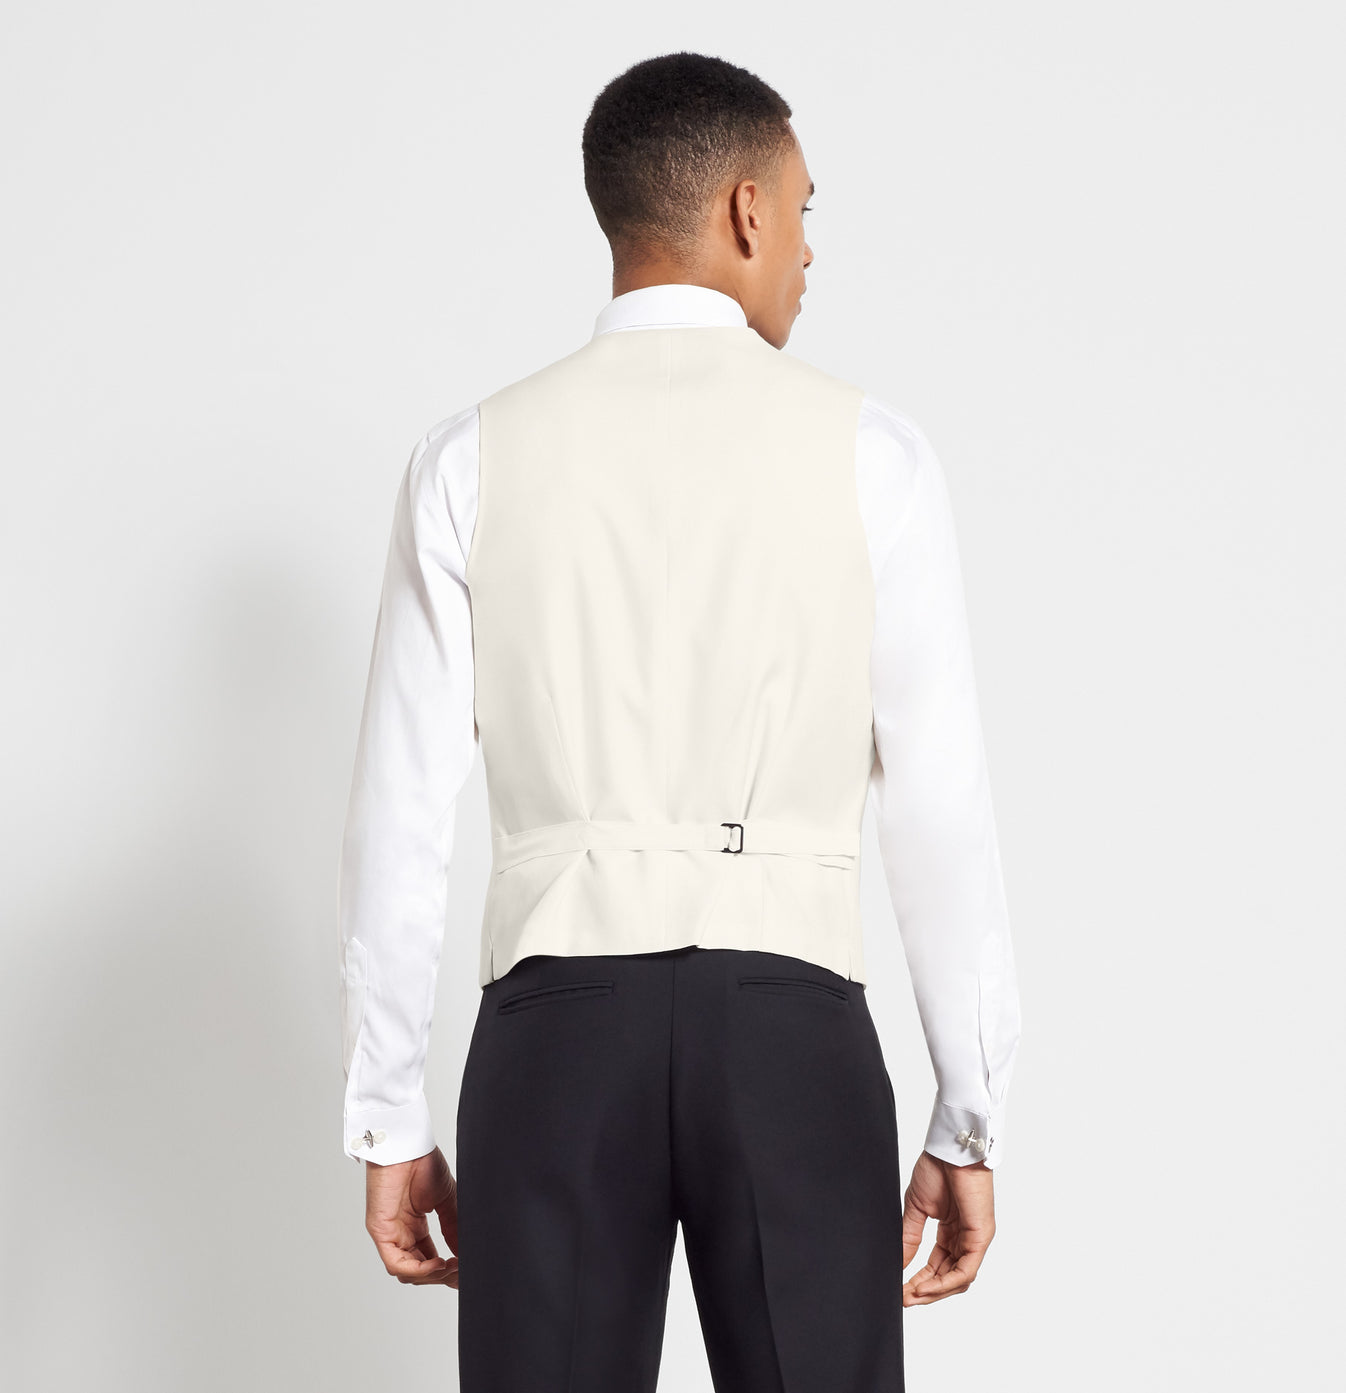 Ivory Tuxedo Vest